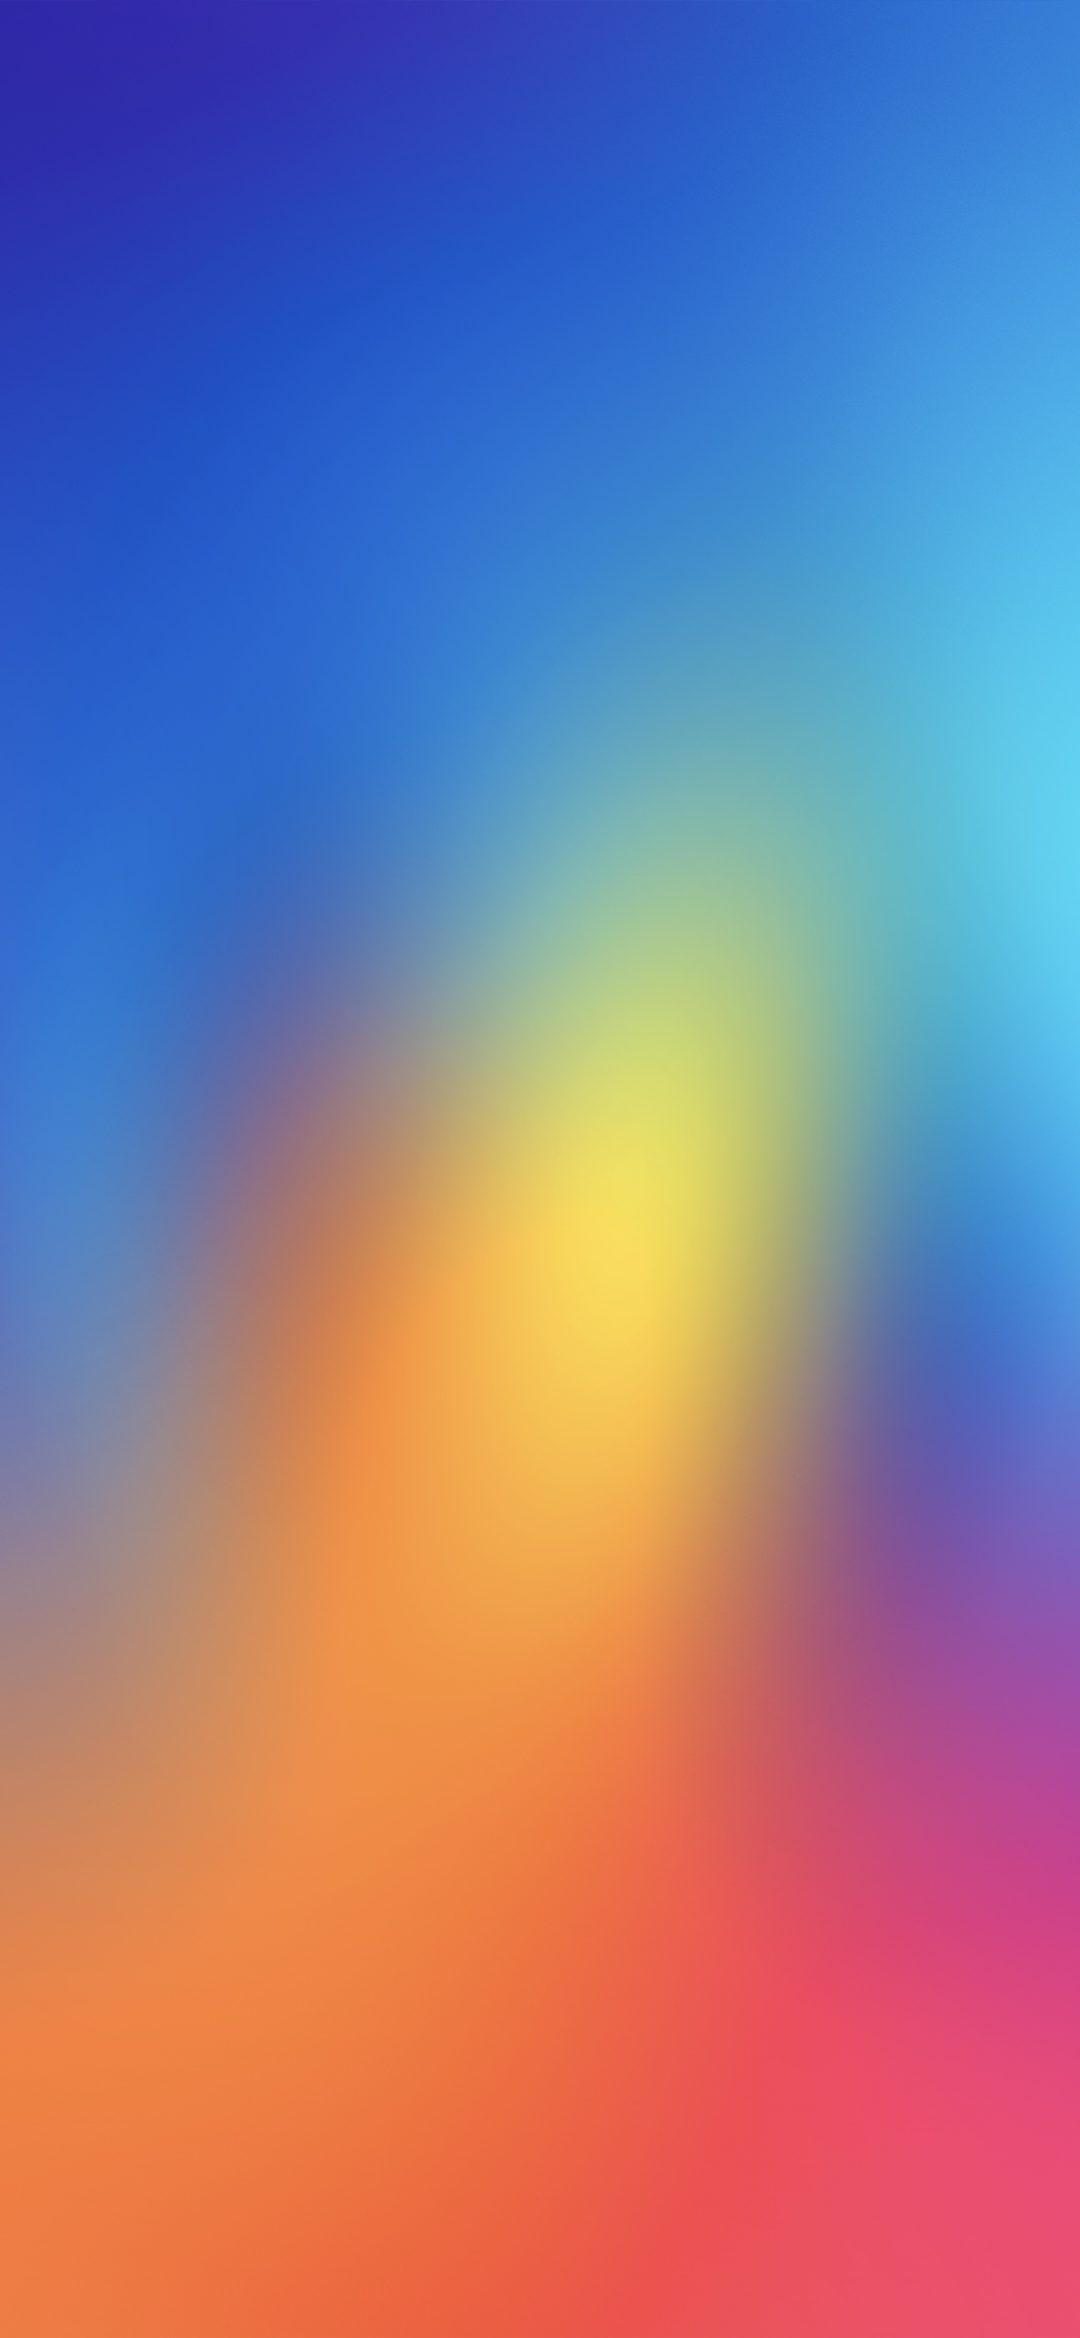 top 5 iOS features – bright vibrancy by Hk3ToN | Zollotech